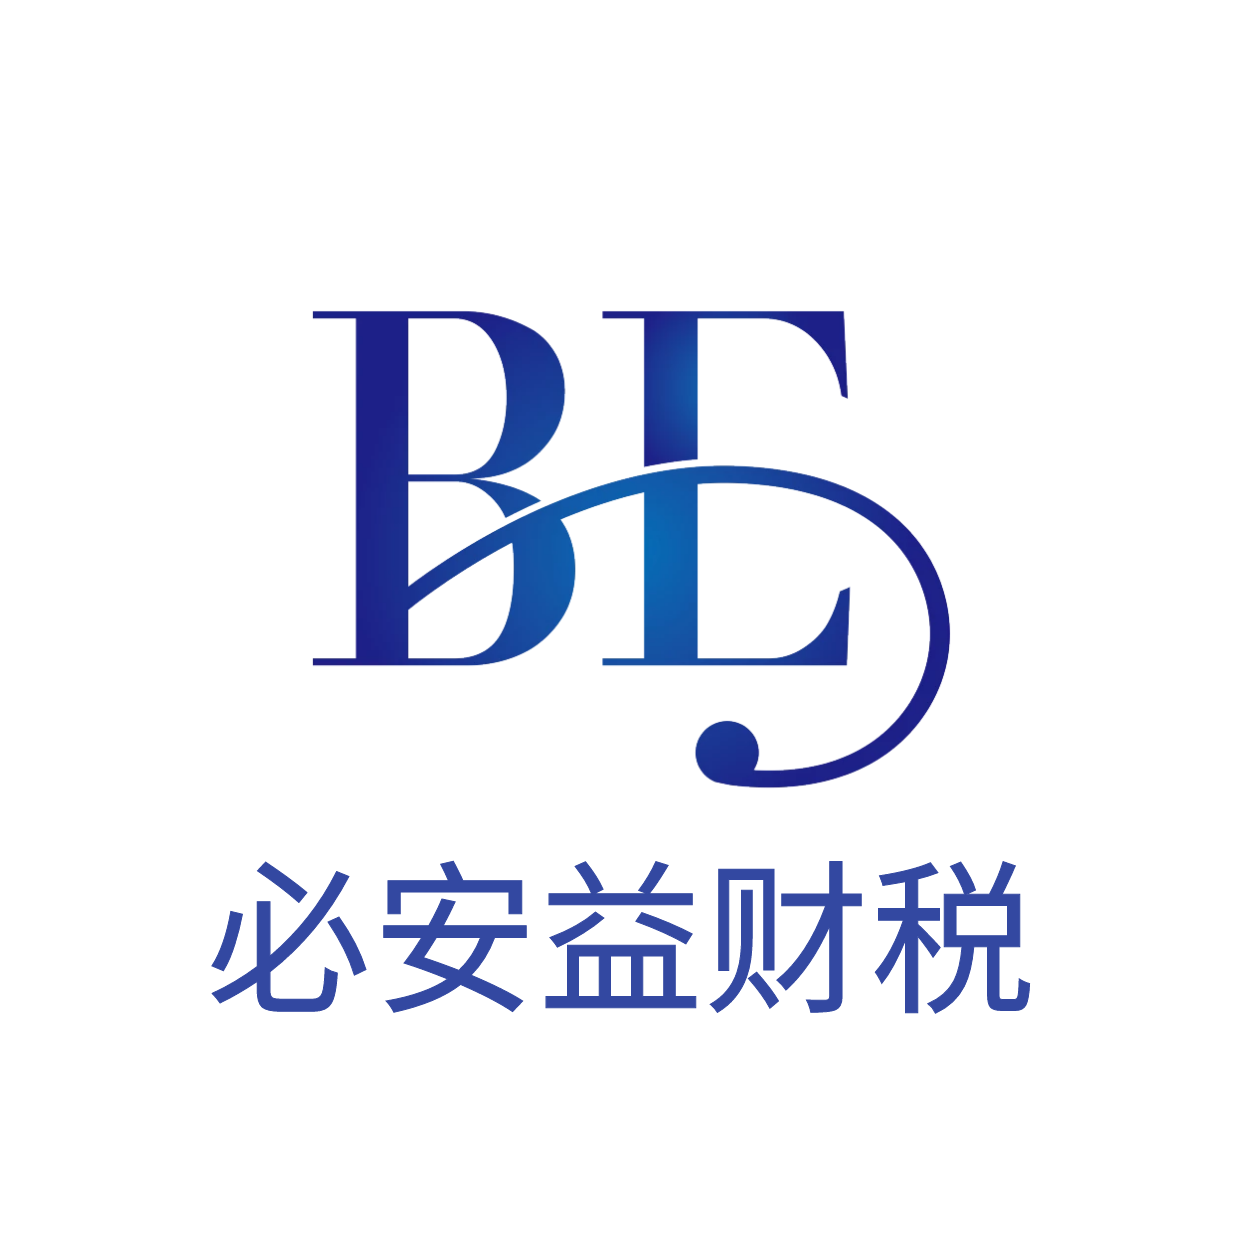 Betax 中文